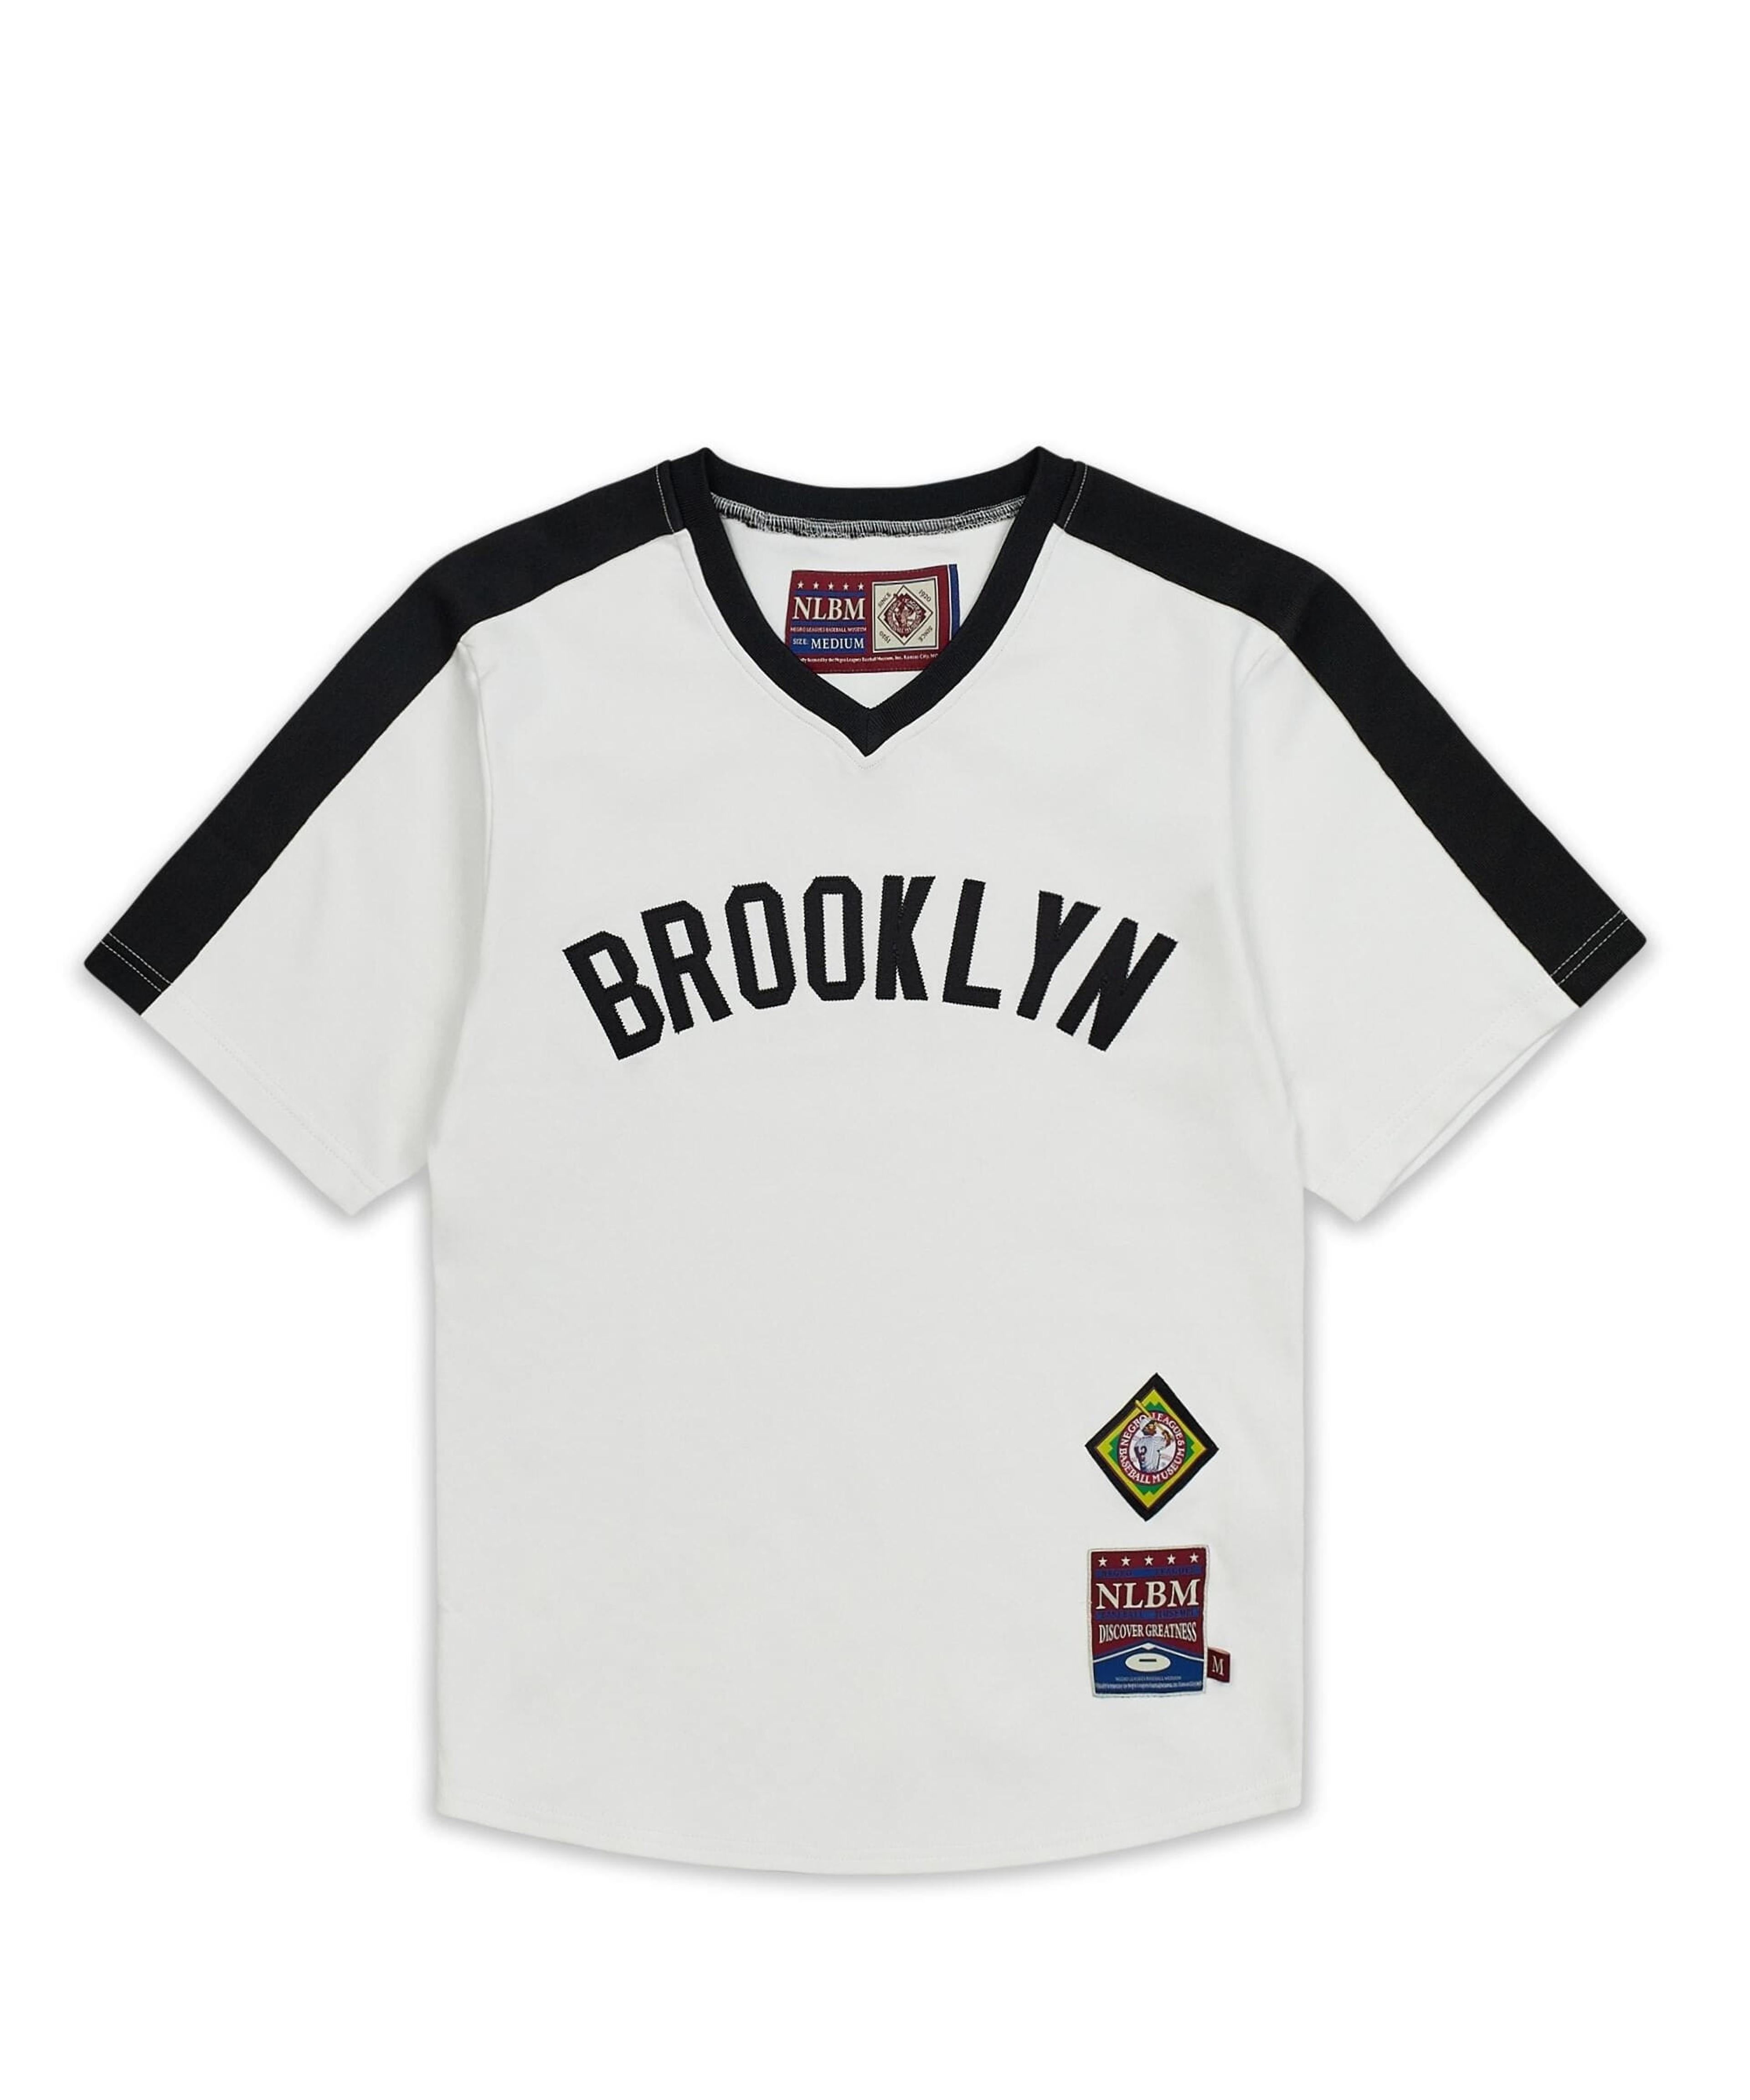 Official Brooklyn Royal Giants Jerseys, Baseball Jerseys, Uniforms